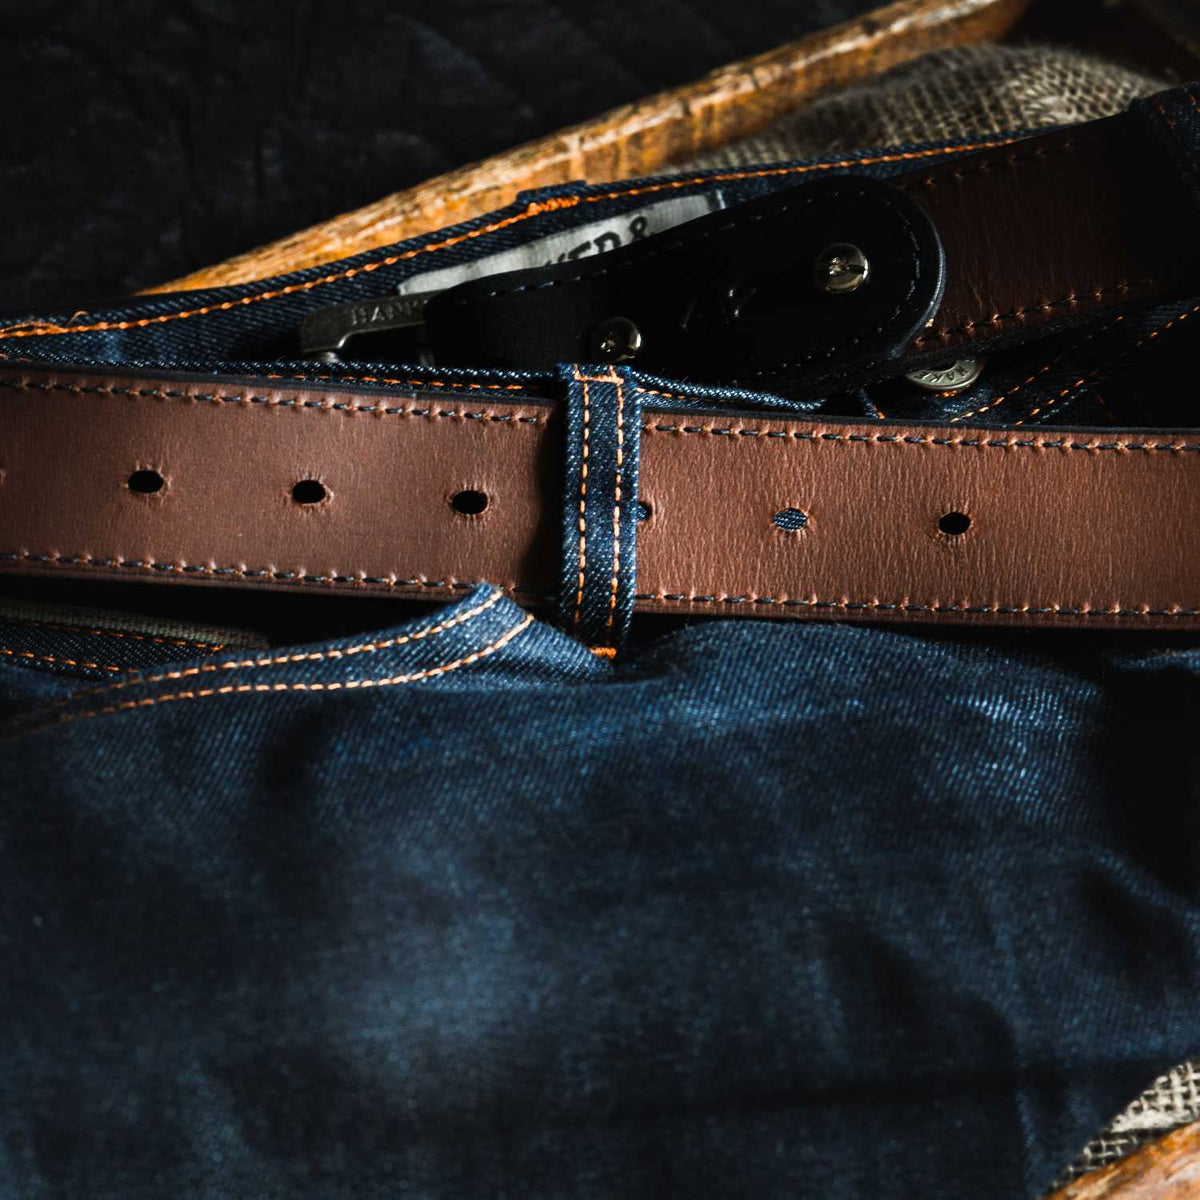 Premium Leather Cream and Color Restoration - Hanks Belts